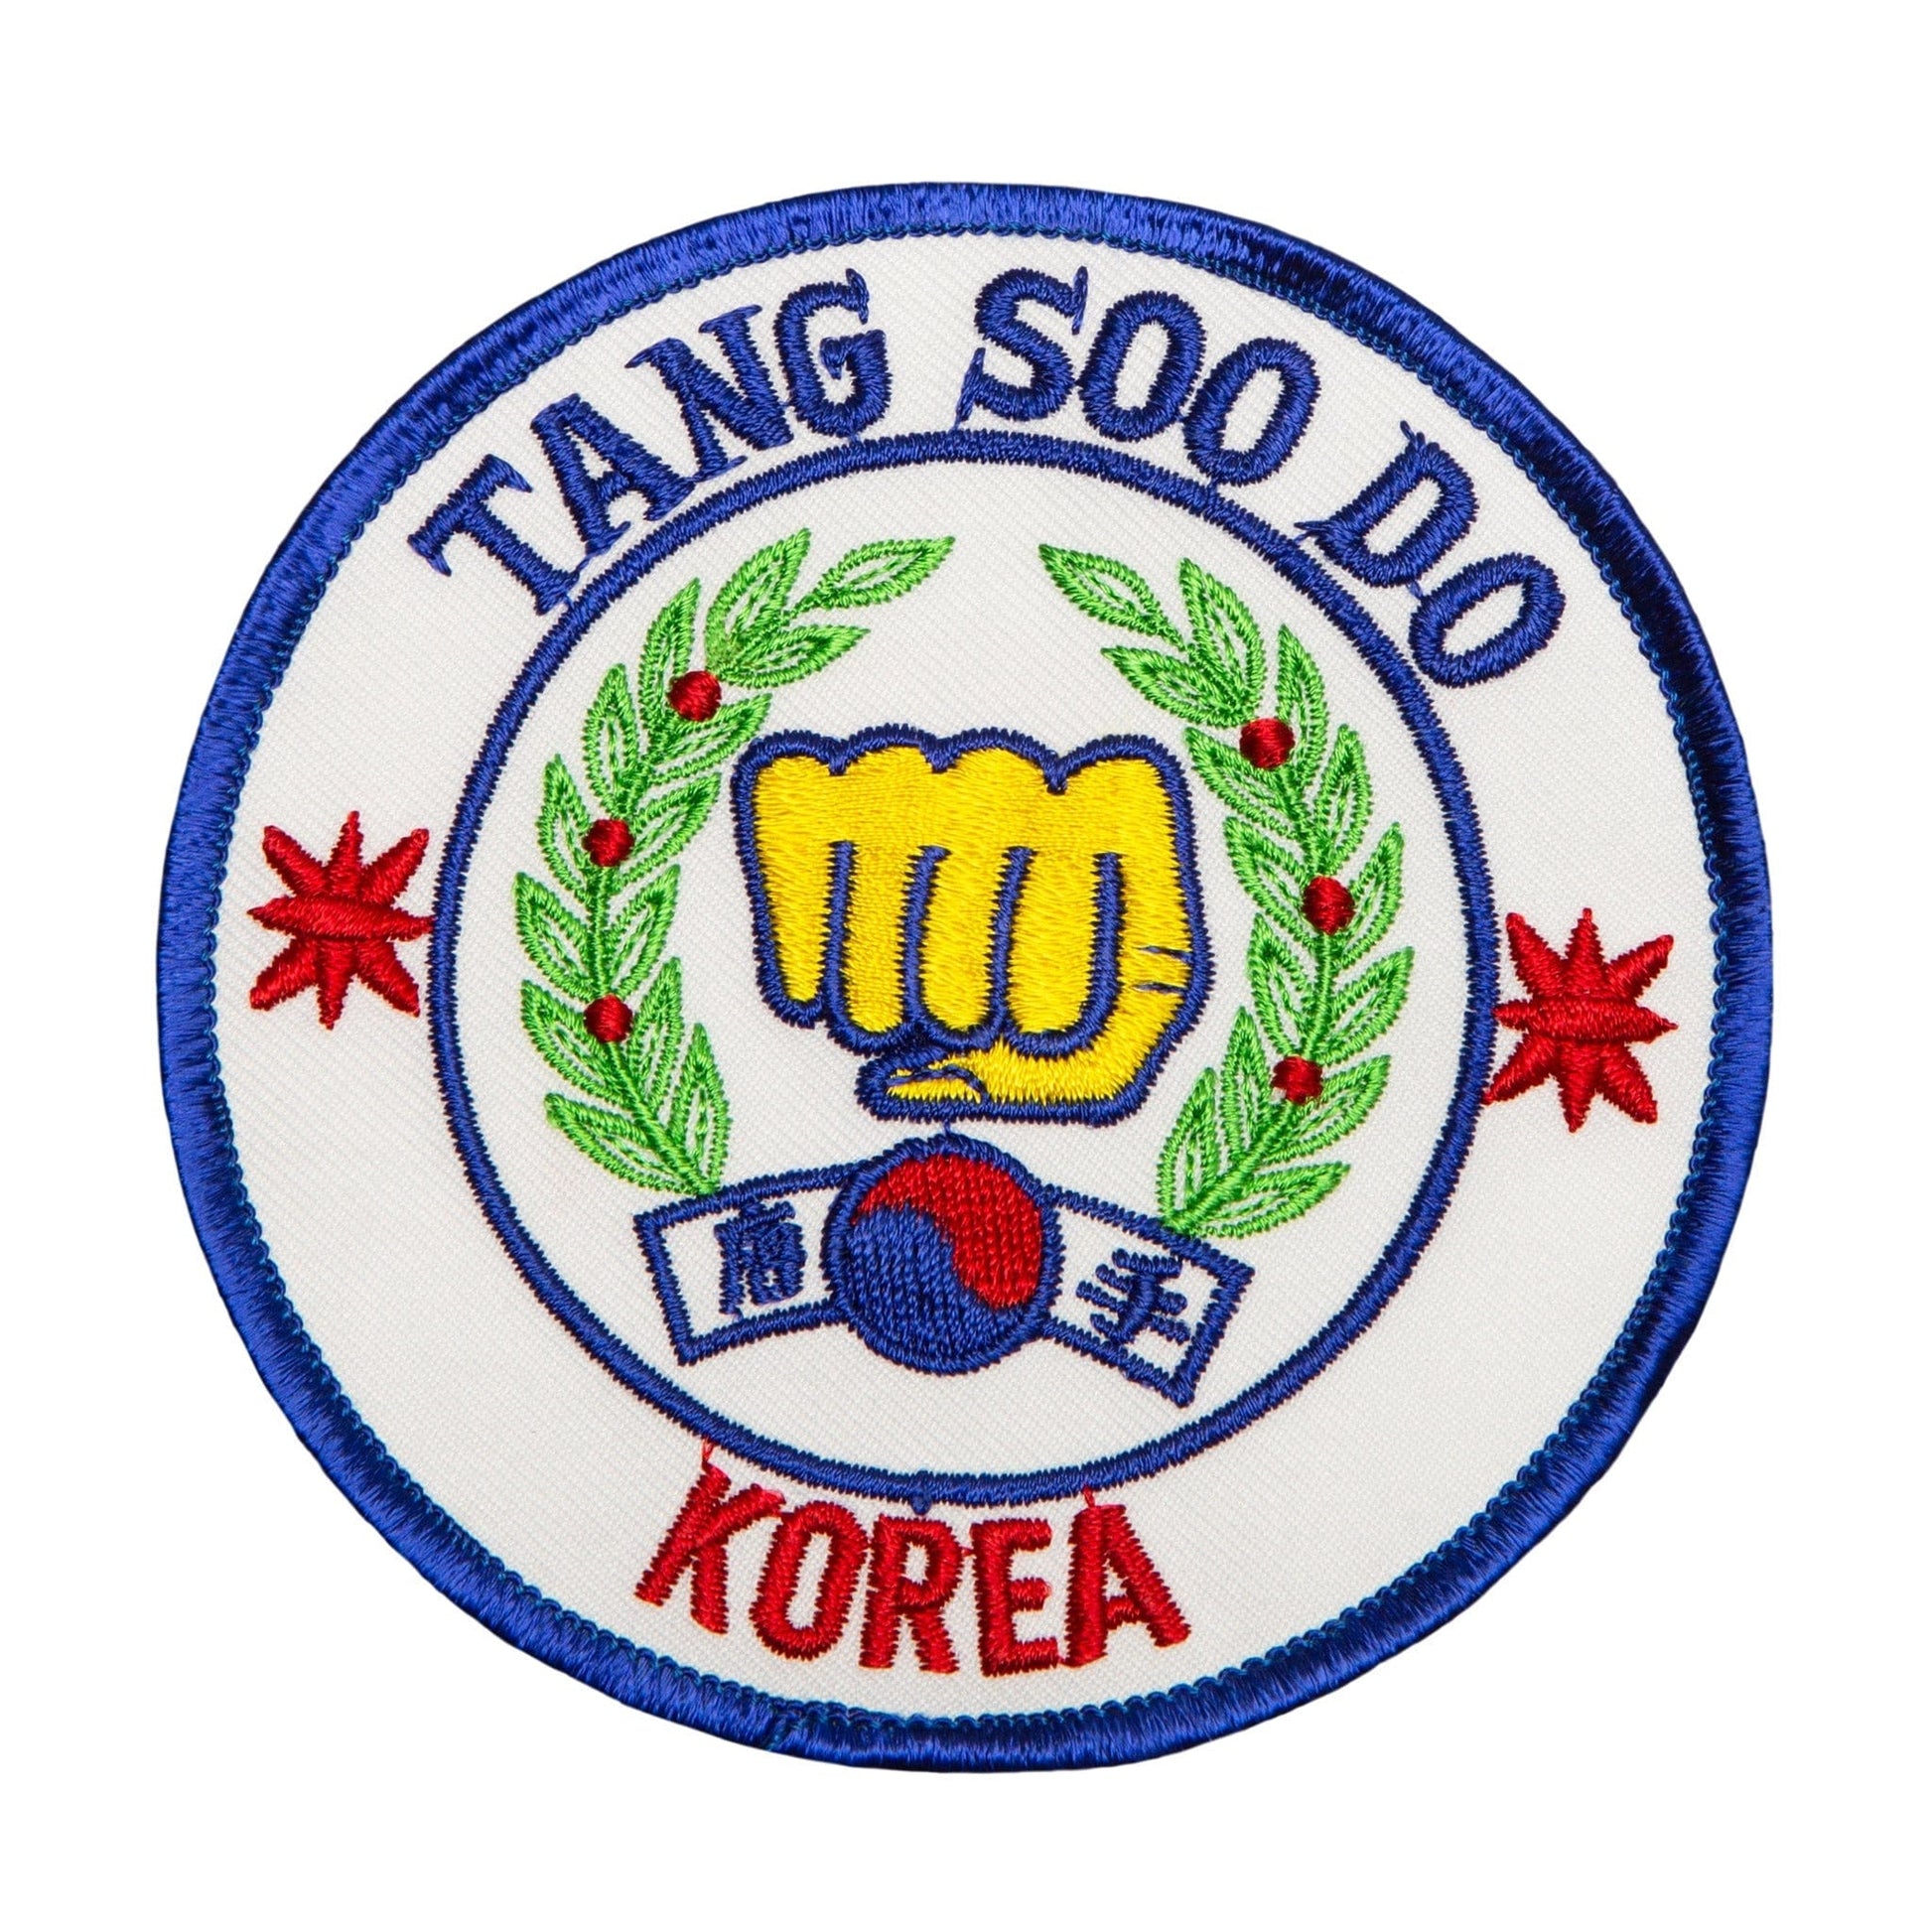 EclipseMartialArtsSupplies sporting goods Tang Soo Do/Korea Patch Martial Arts Uniform Patch